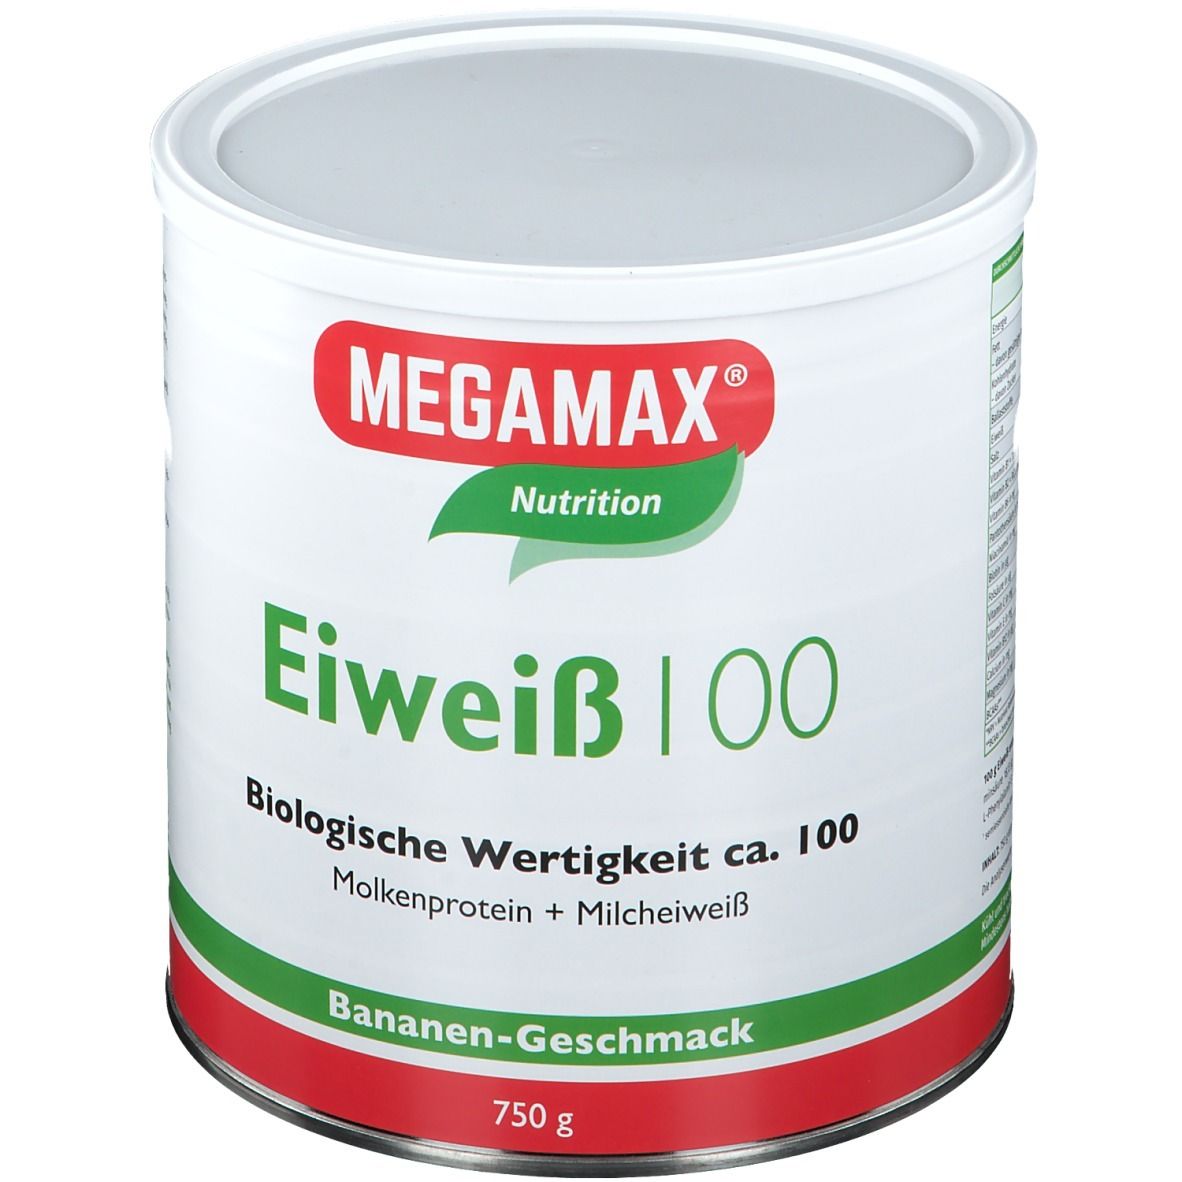 MEGAMAX® Nutrition Eiweiß 100 Bananen-Geschmack